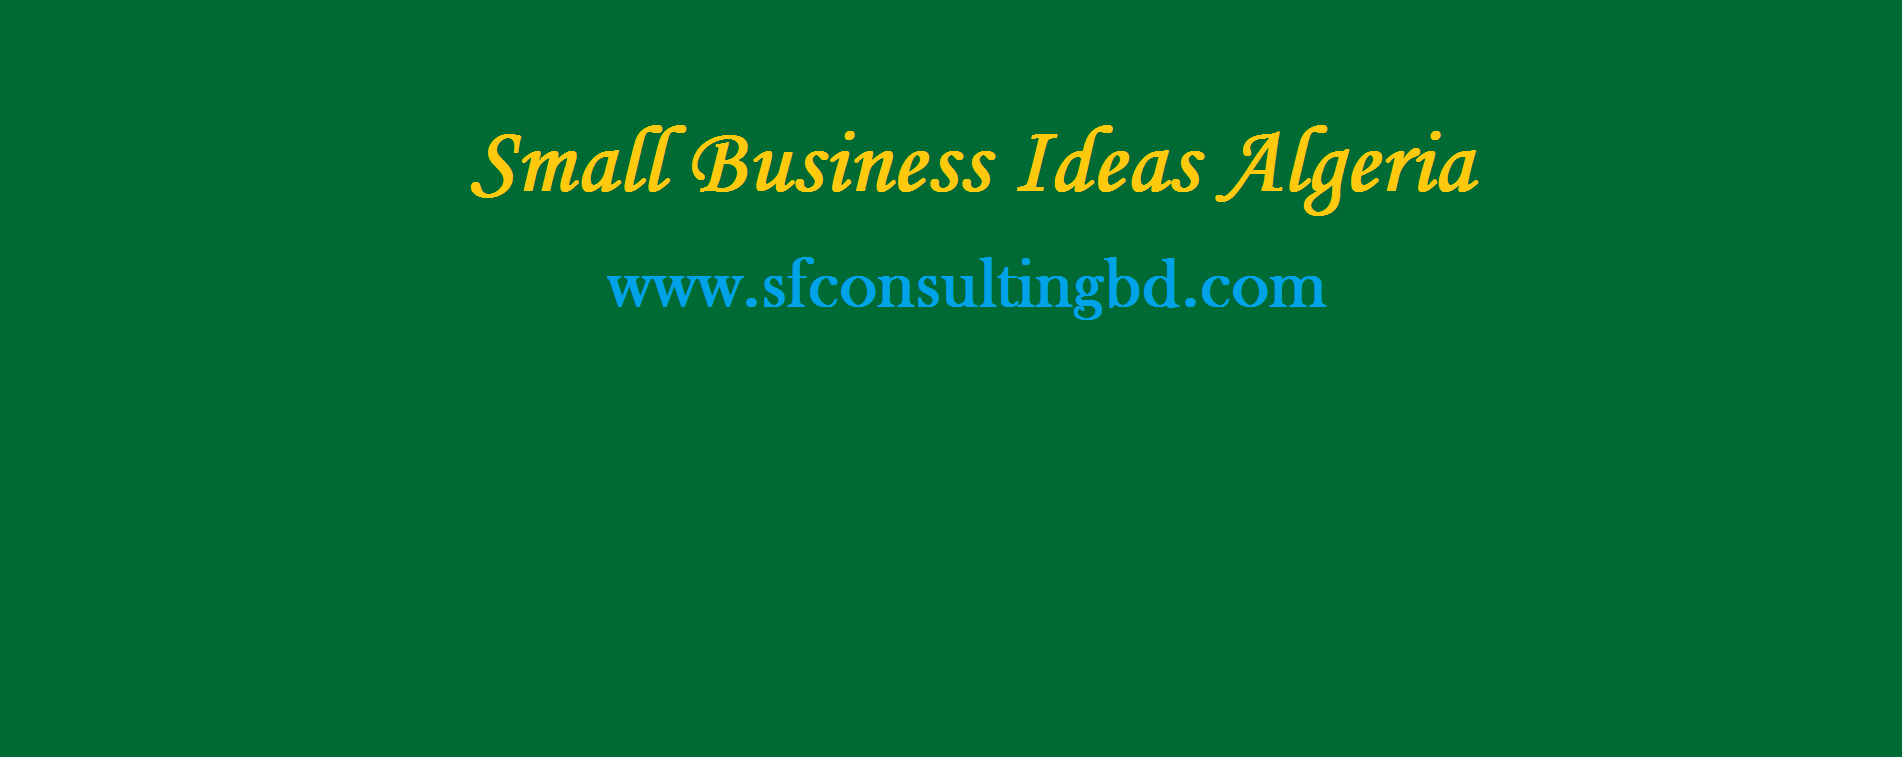 <img src="Business-ideas-in-Algeria.png" alt="Business ideas in Algeria"/>